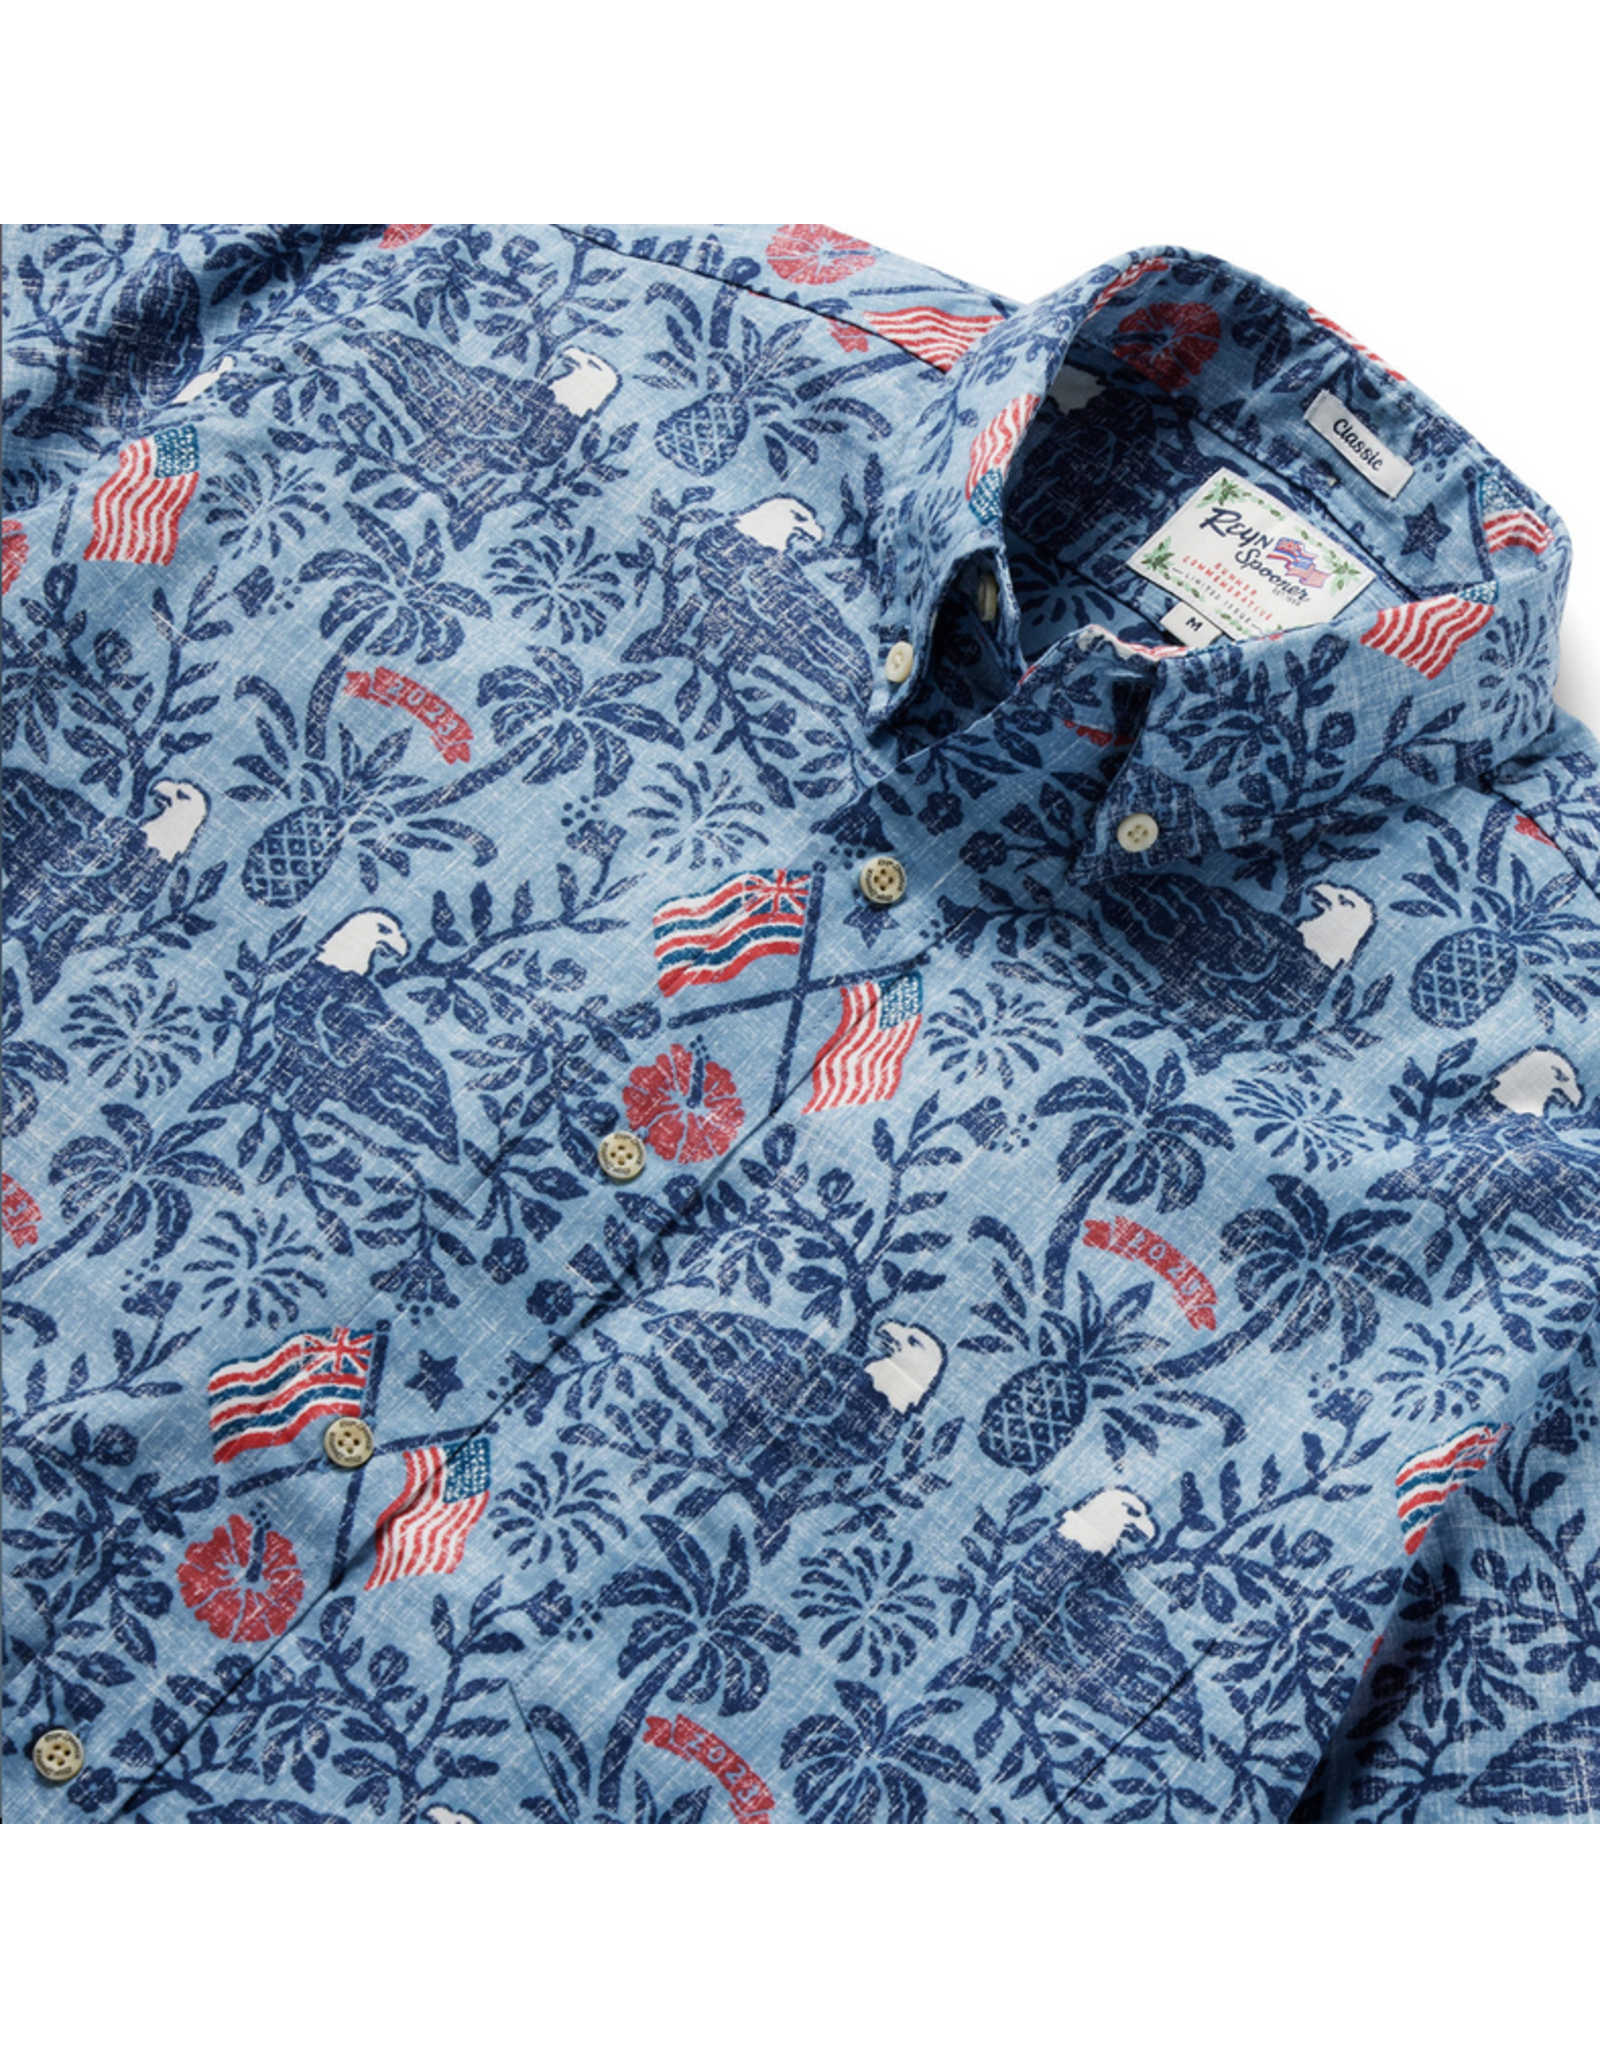 Reyn Spooner Reyn M562412523 ‘23 Summer Commemorative Button  Shirt